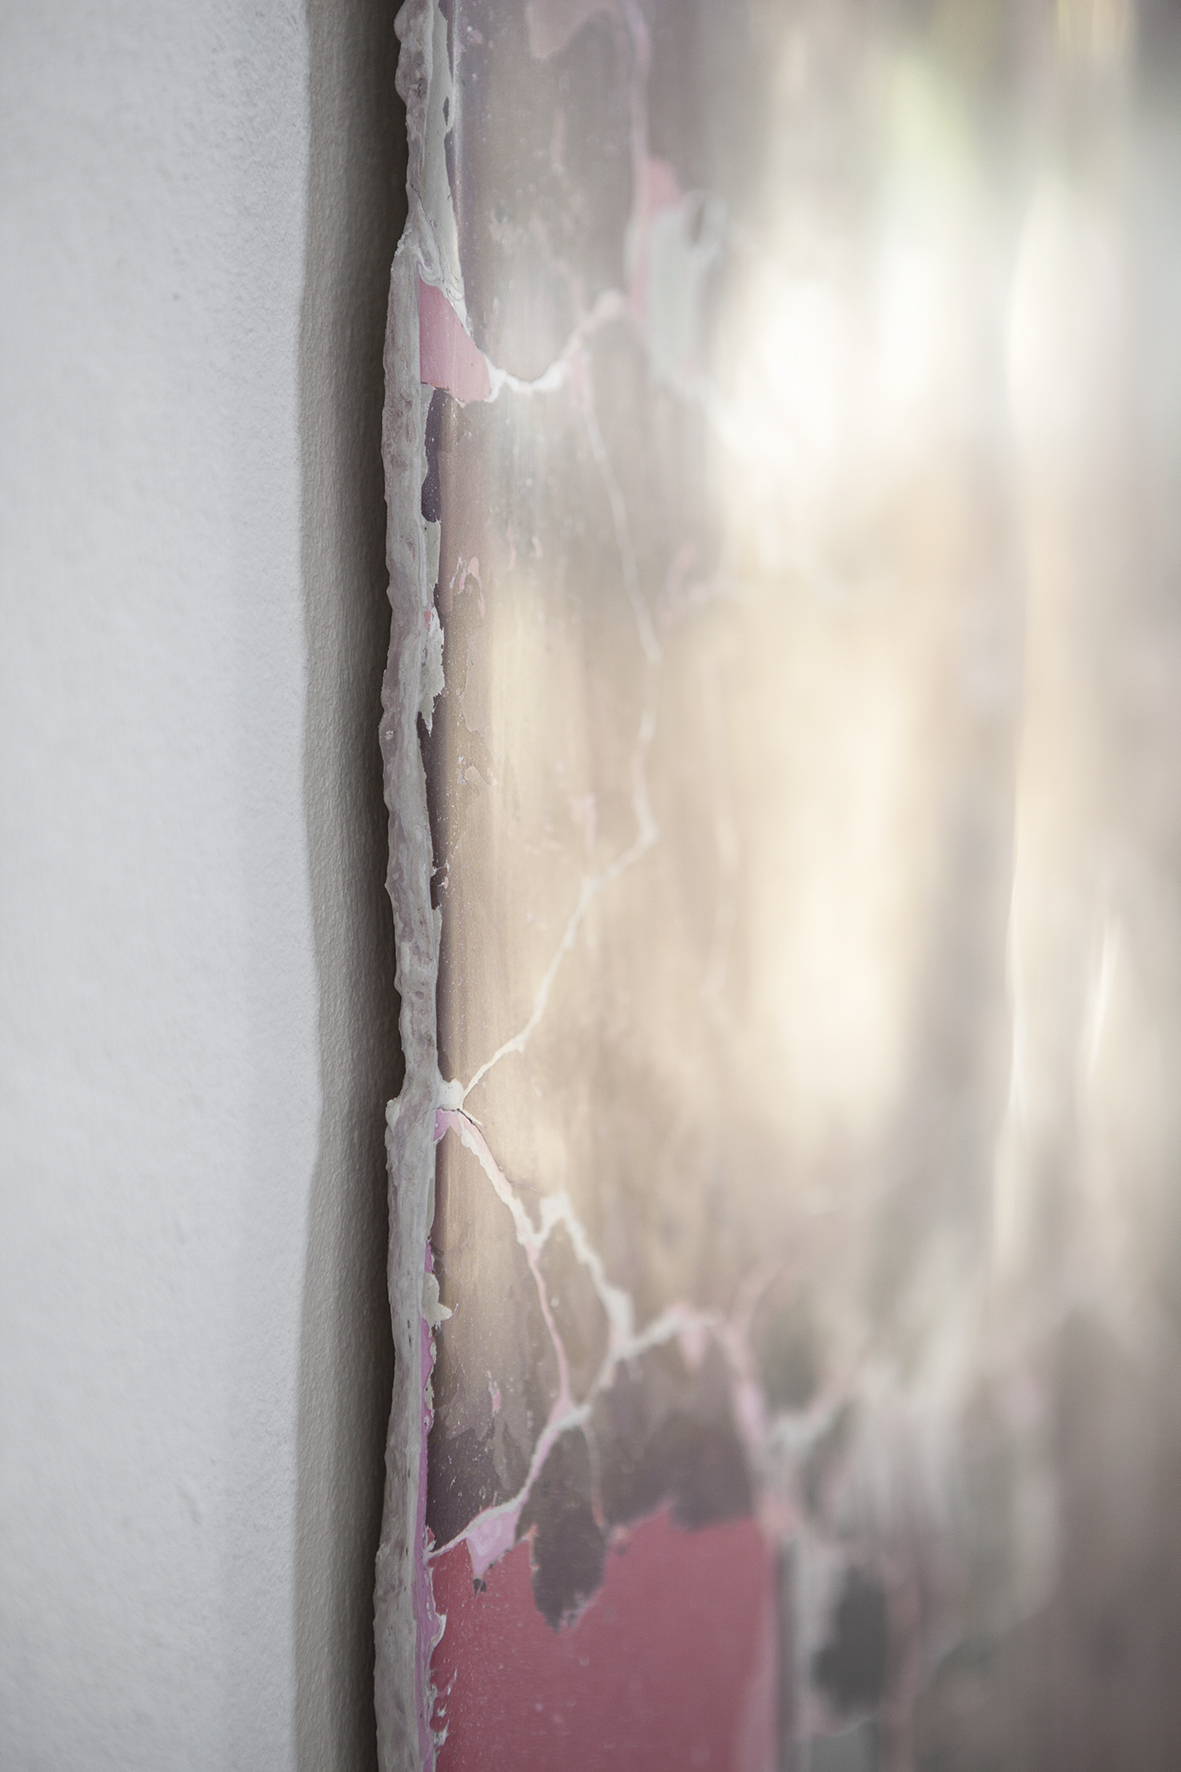 Heti Prack, World Fire (detail), 2021, 142 x 102 cm, Gypsum, pigments, bone glue